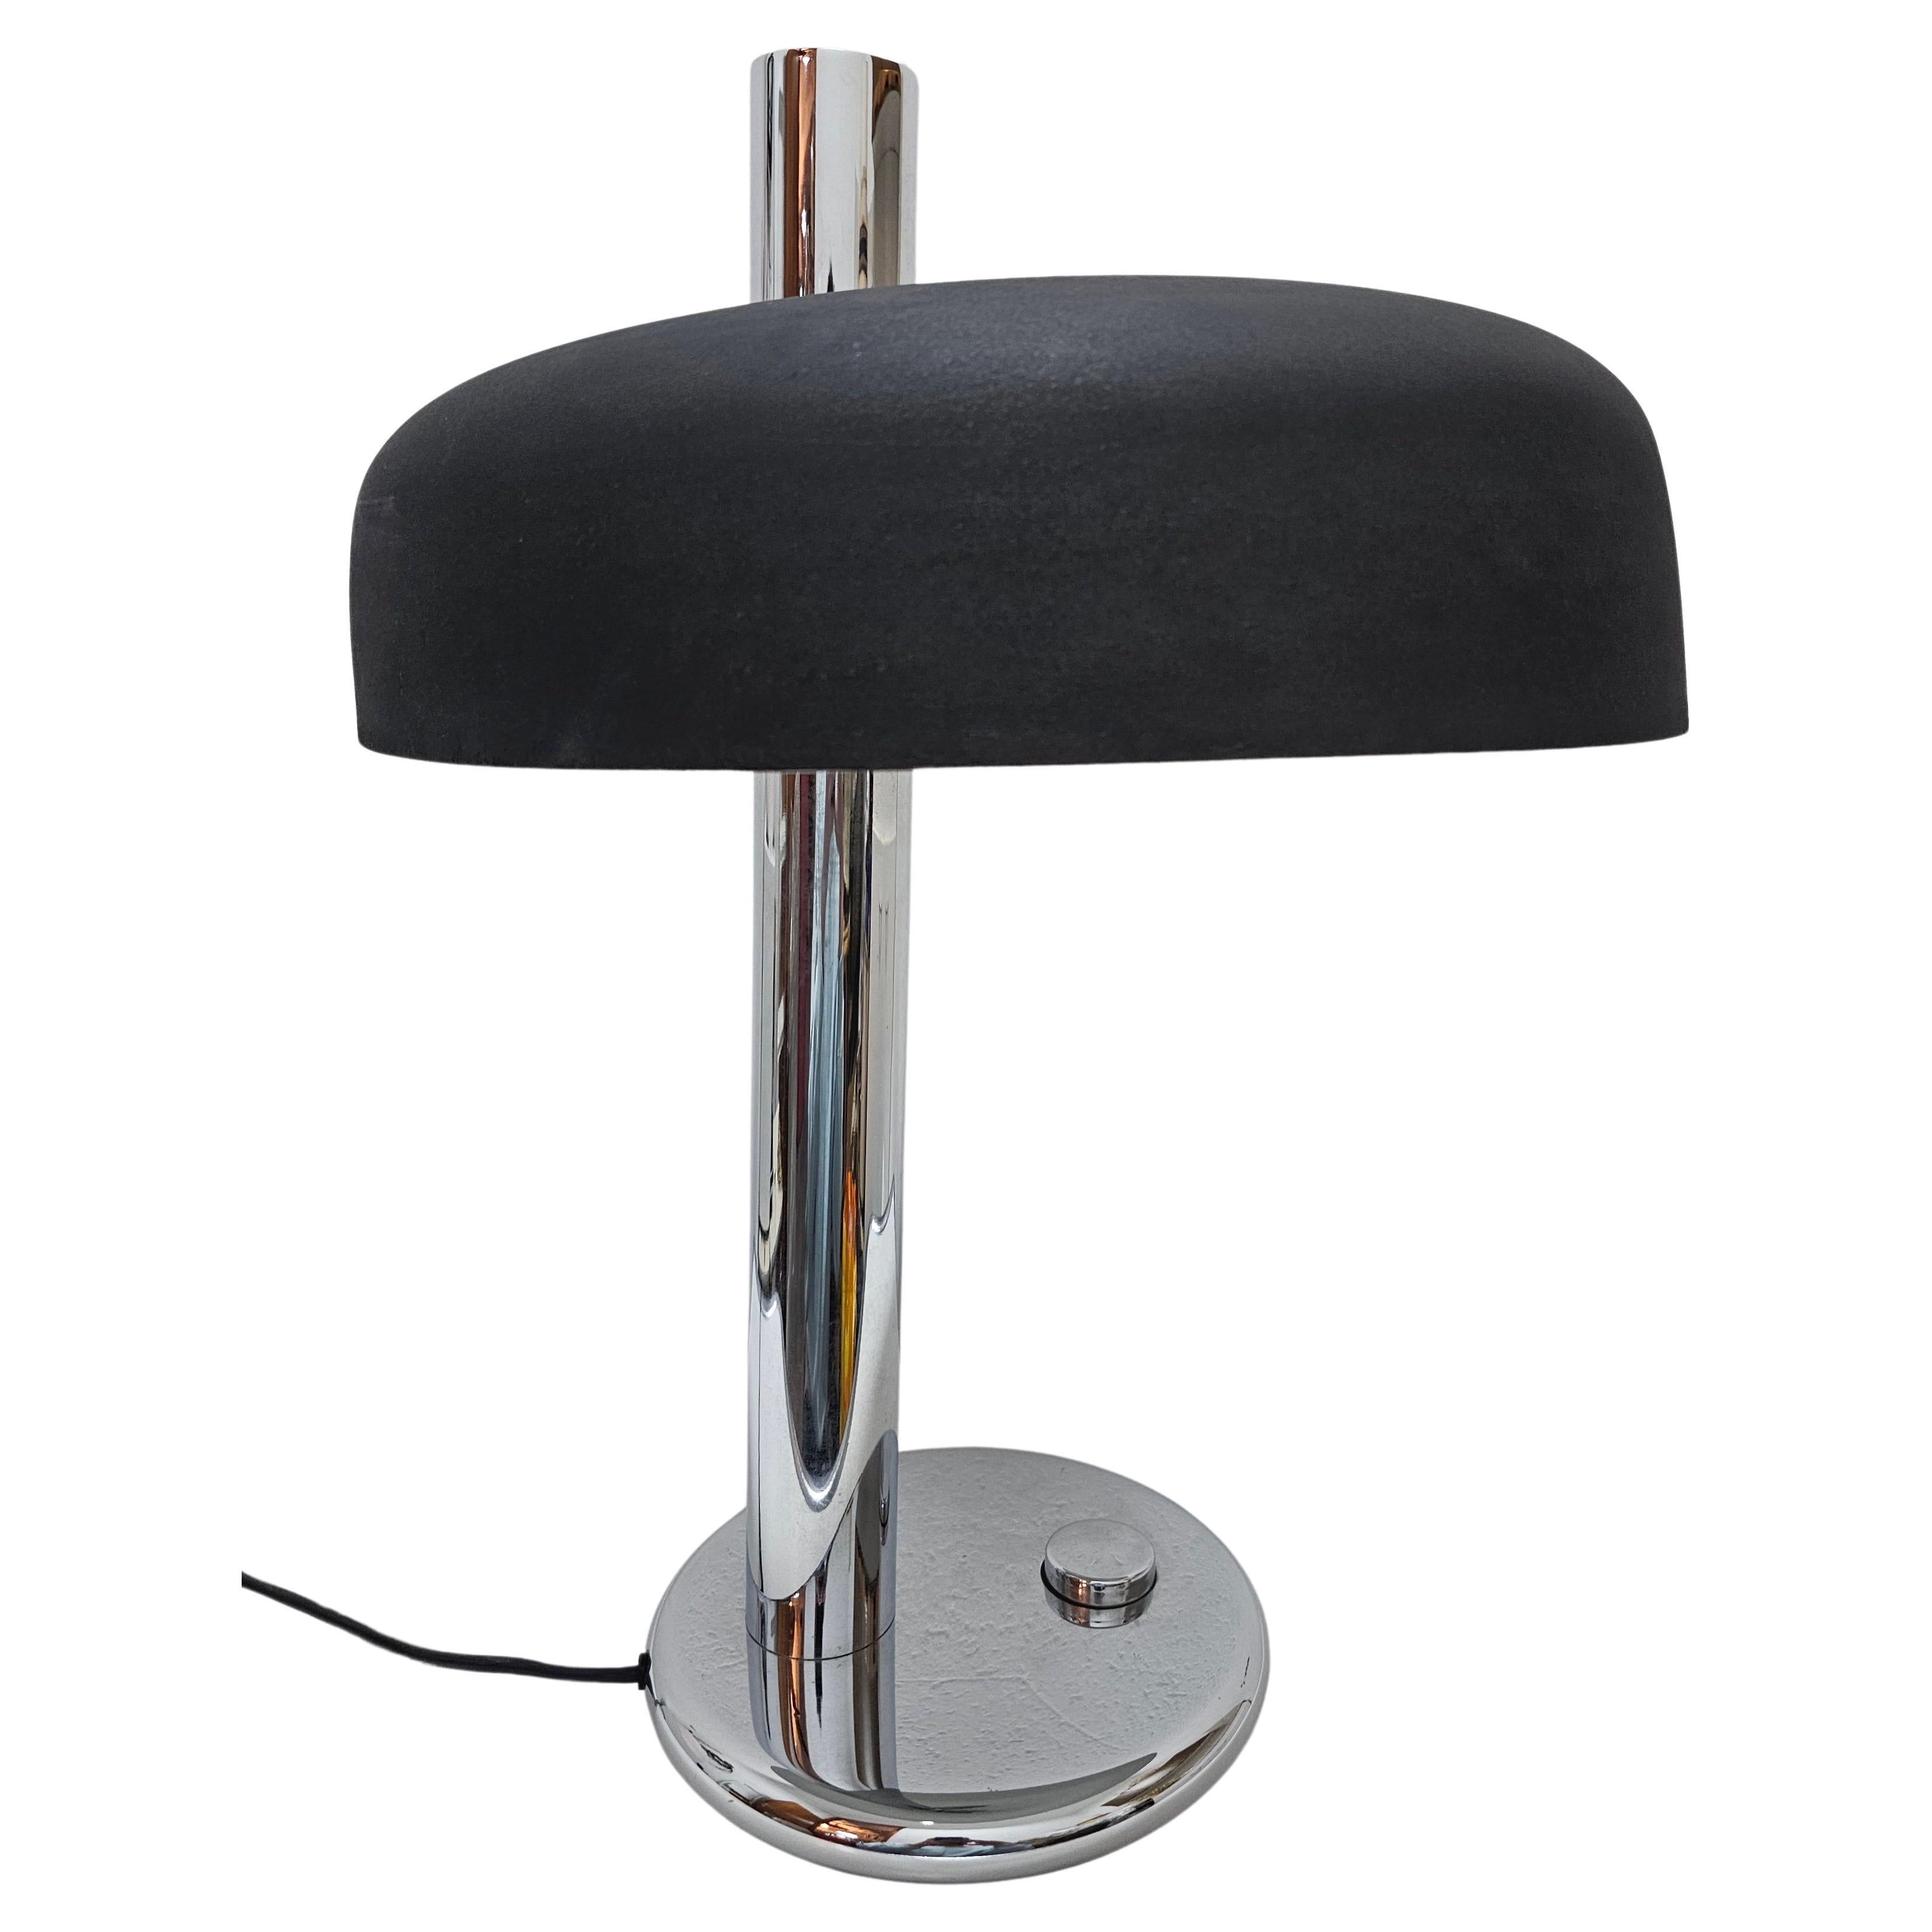 Bauhaus Style Table Lamp Model 7603 designed by Heinz Pfaender for Hillebrand 